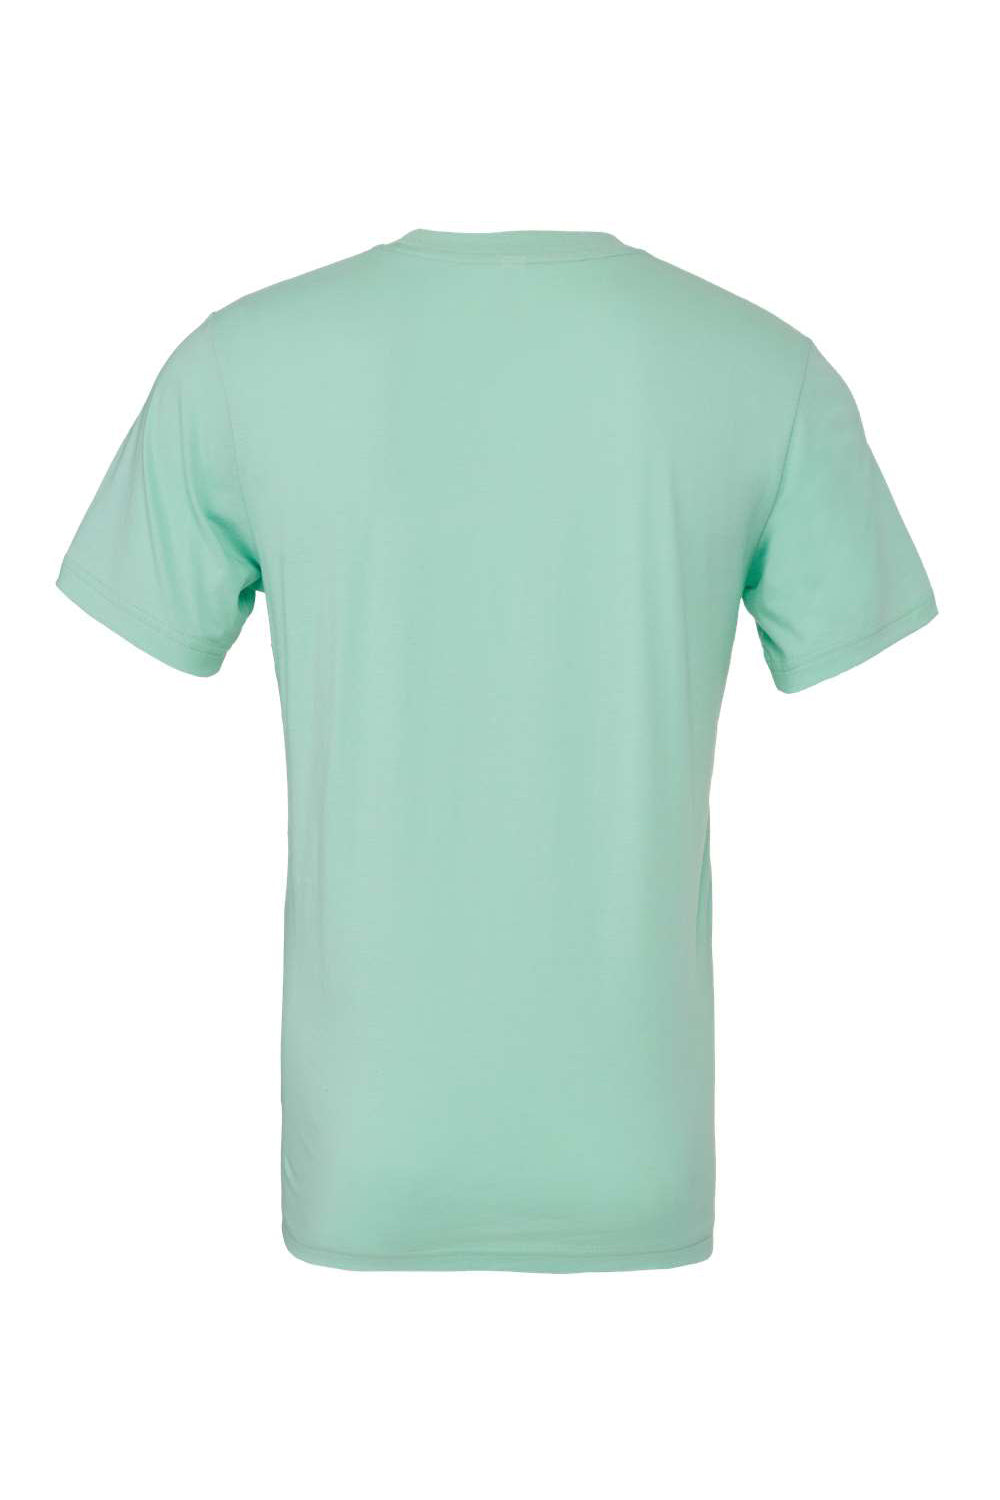 Bella + Canvas BC3001/3001C Mens Jersey Short Sleeve Crewneck T-Shirt Mint Green Flat Back